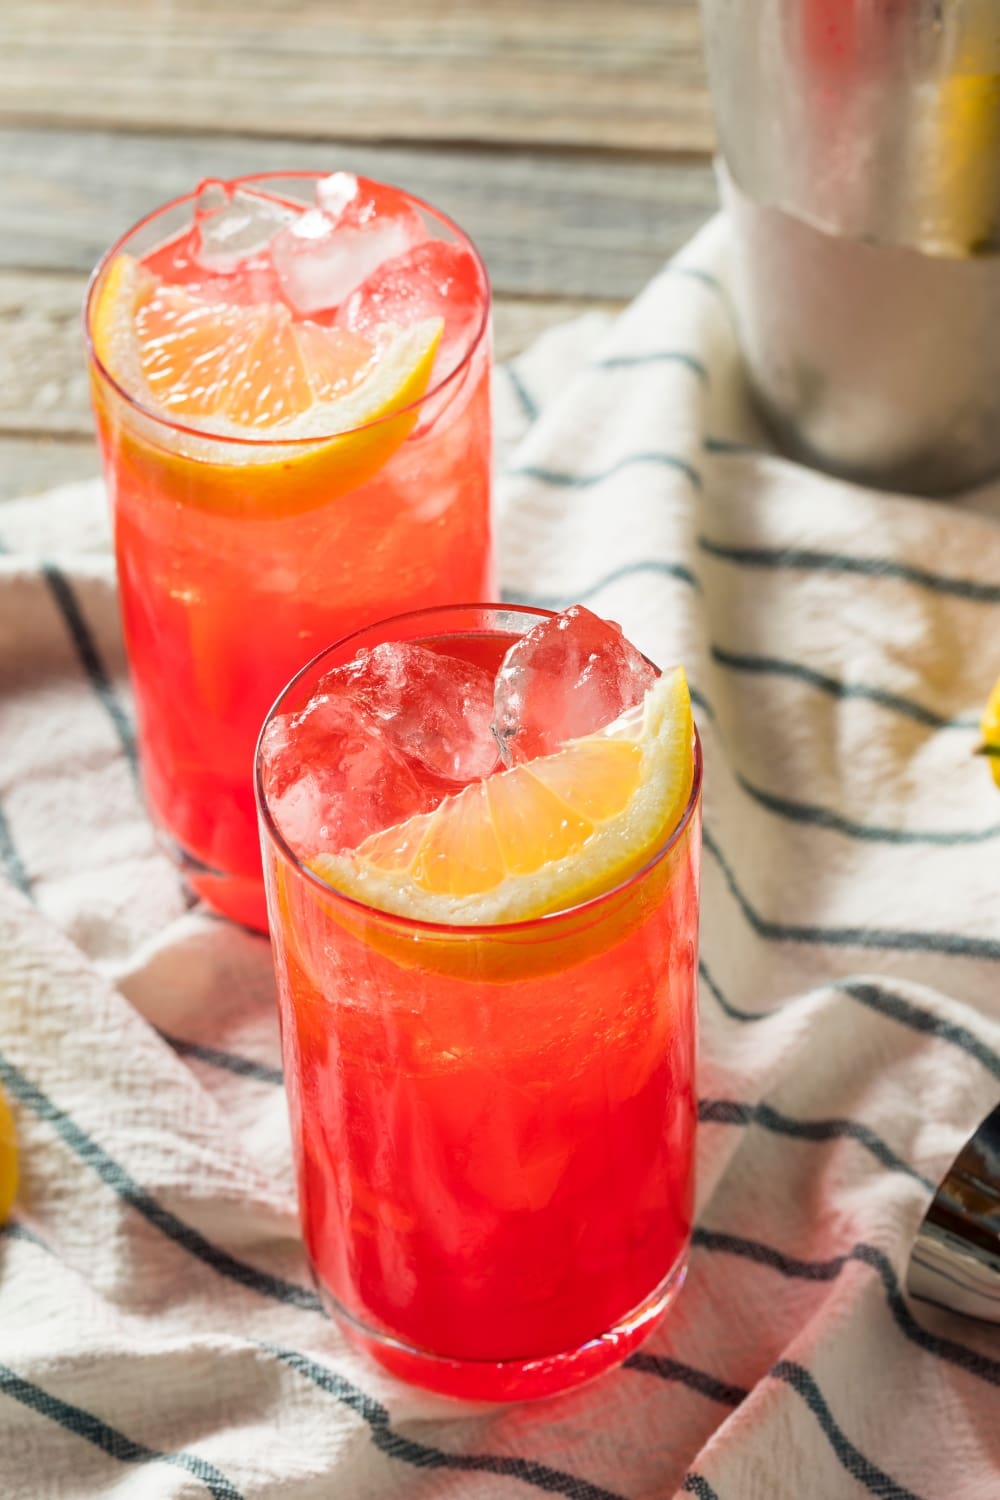 Boozy Homemade Pinkish Red Sloe Gin with Lemon Juice